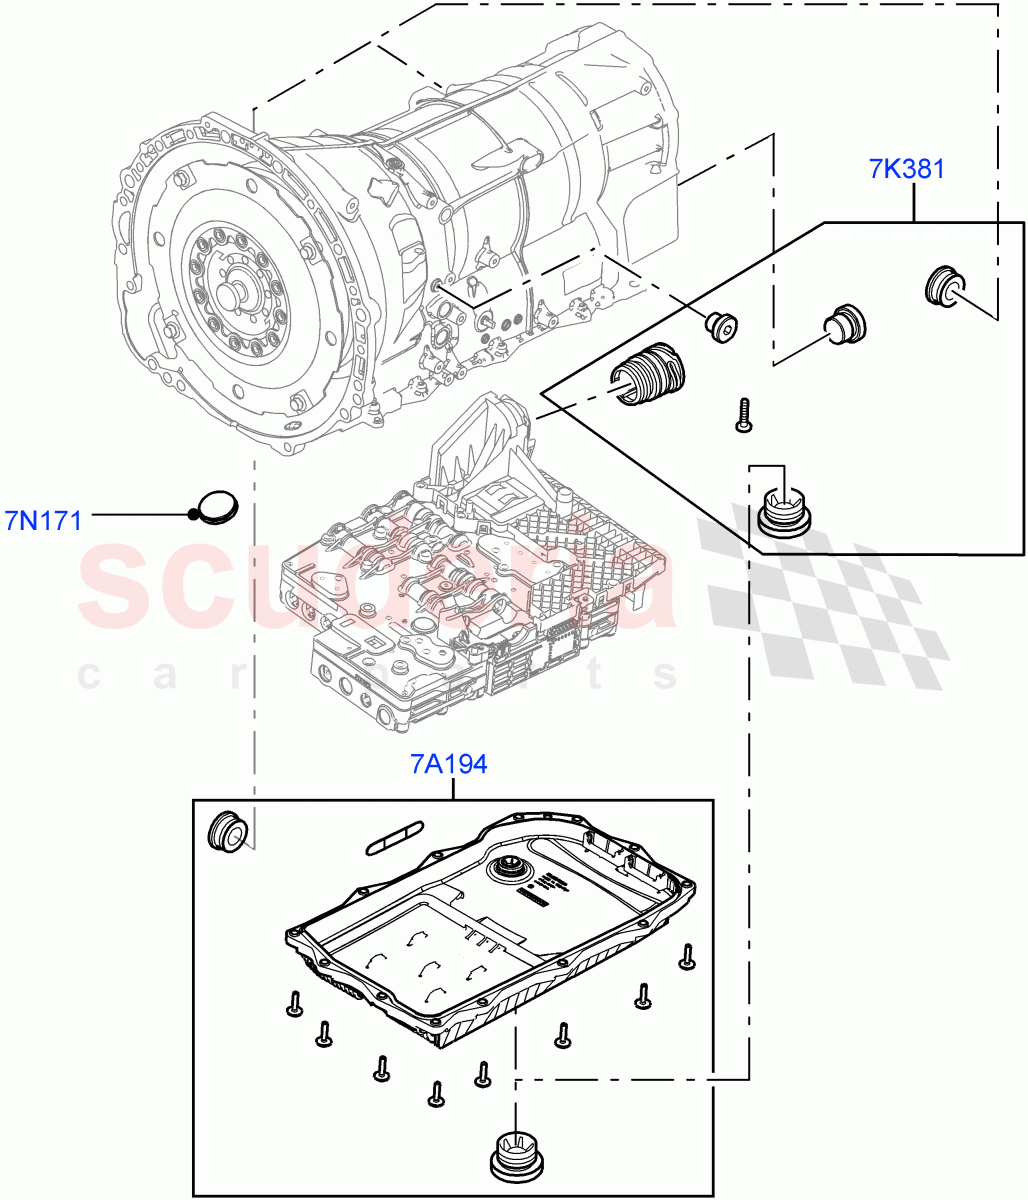 Transmission External Components(5.0L P AJ133 DOHC CDA S/C Enhanced,8 Speed Auto Trans ZF 8HP70 4WD)((V)FROMKA000001) of Land Rover Land Rover Range Rover Velar (2017+) [3.0 I6 Turbo Diesel AJ20D6]